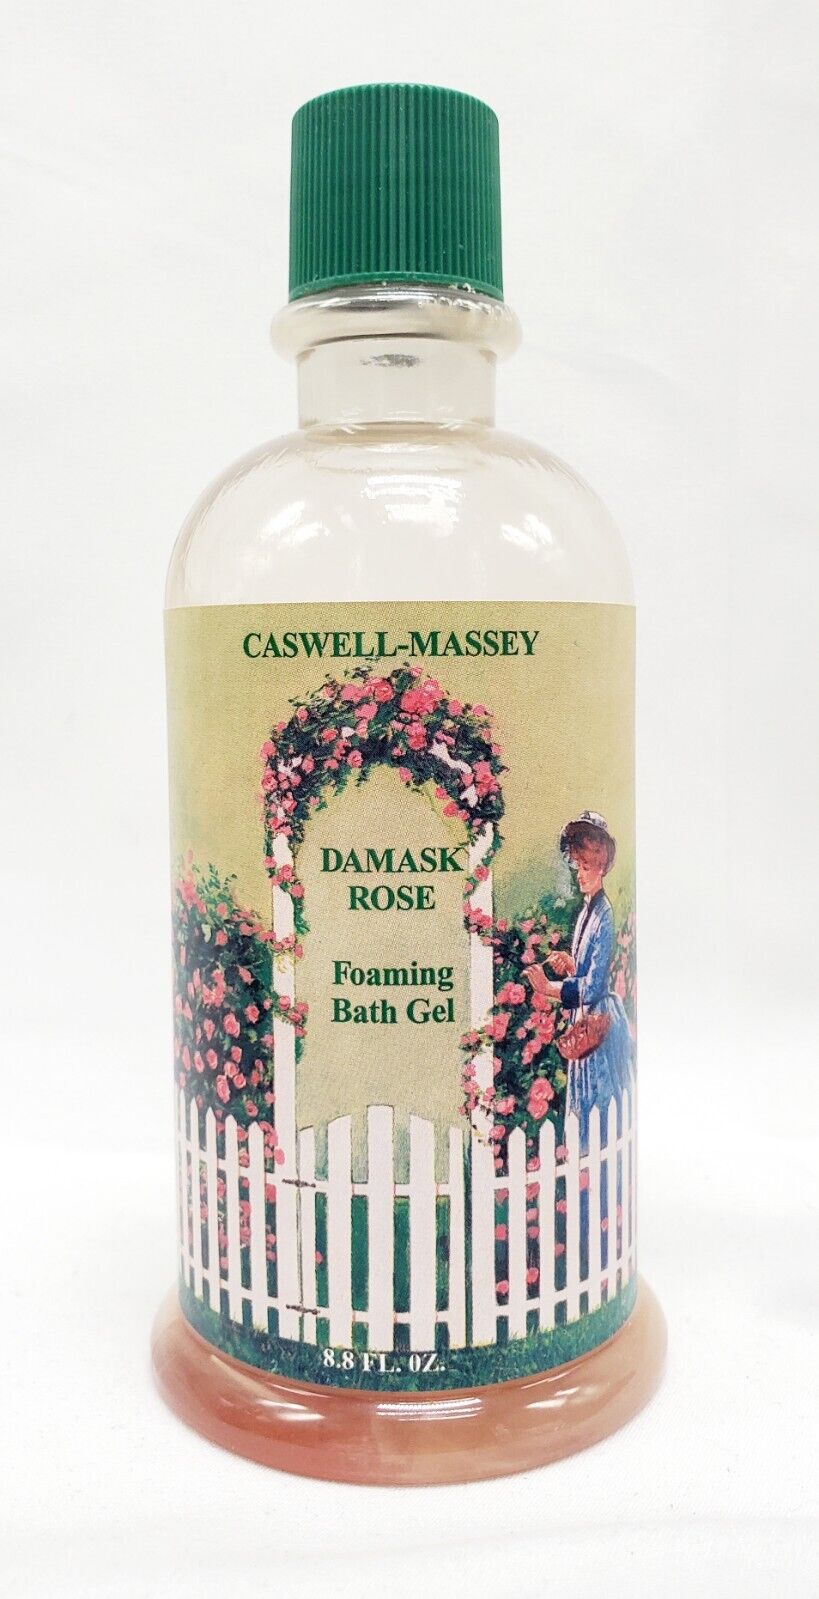 Vintage CASWELL-MASSEY DAMASK ROSE FOAMING BATH GEL 8.8z/250ml 85% FULL